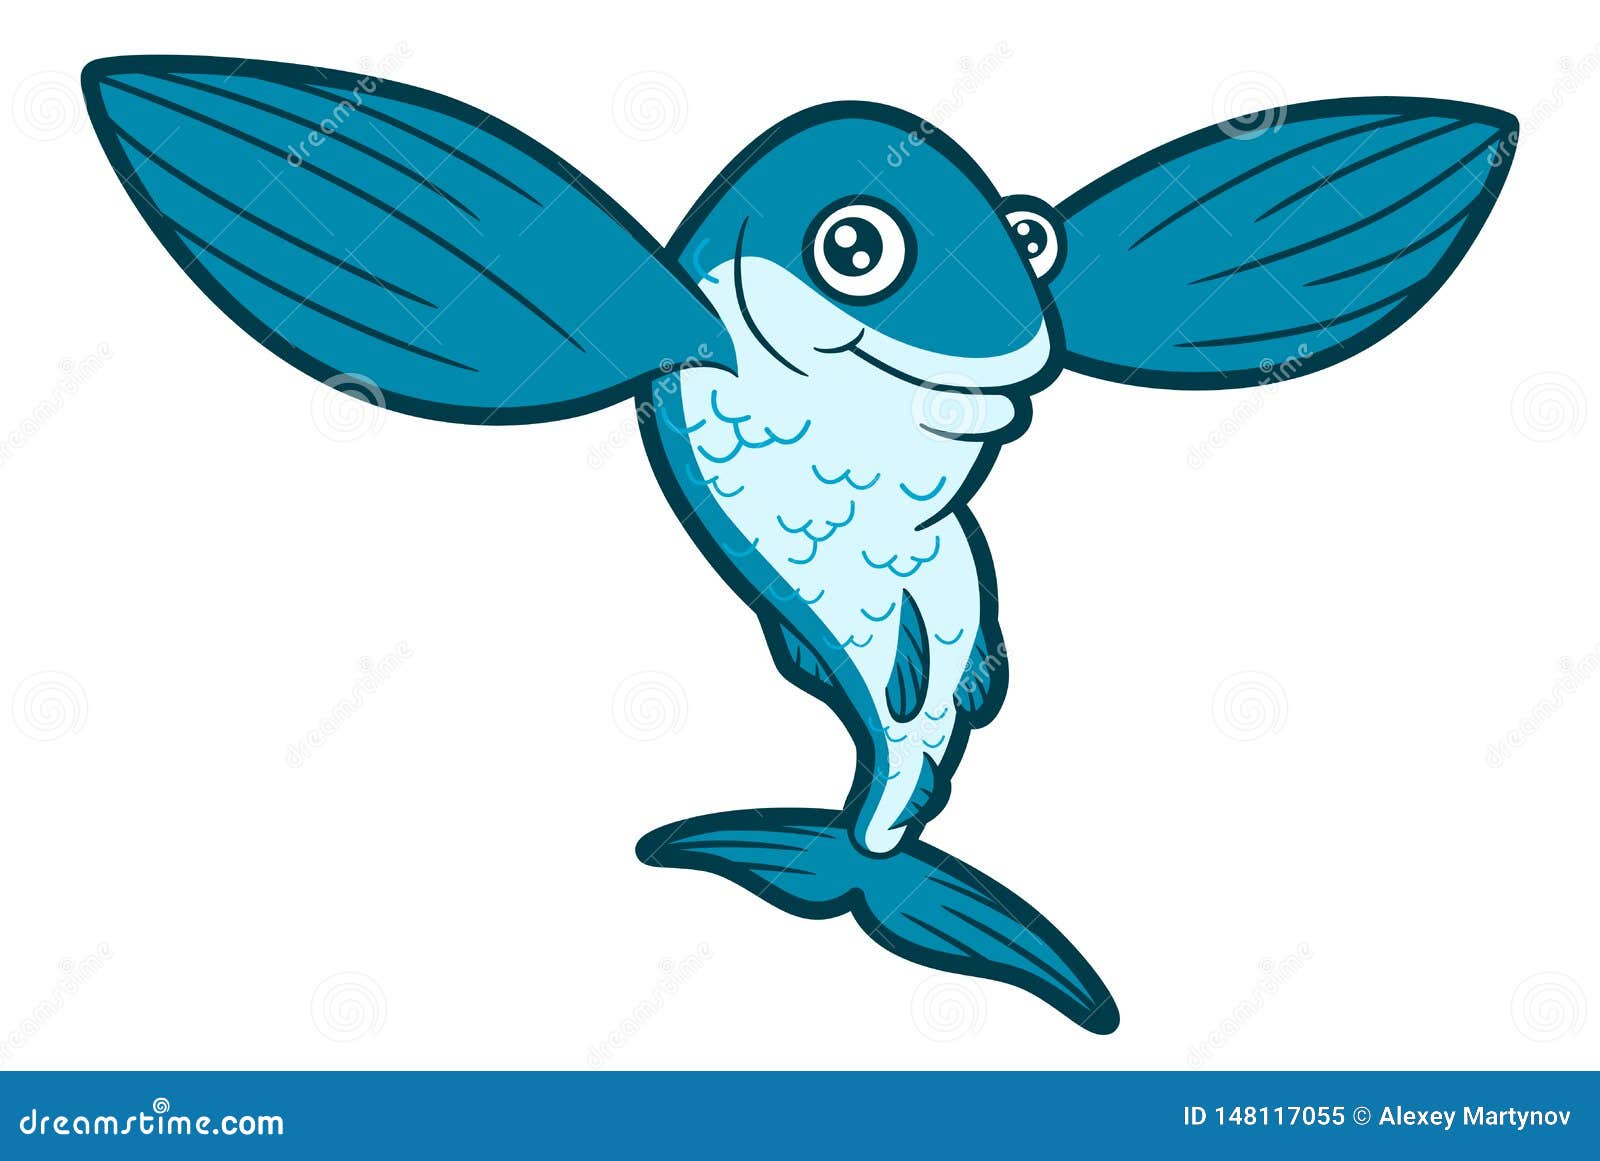 Cute cartoon flying fish stock vector. Illustration of underwater